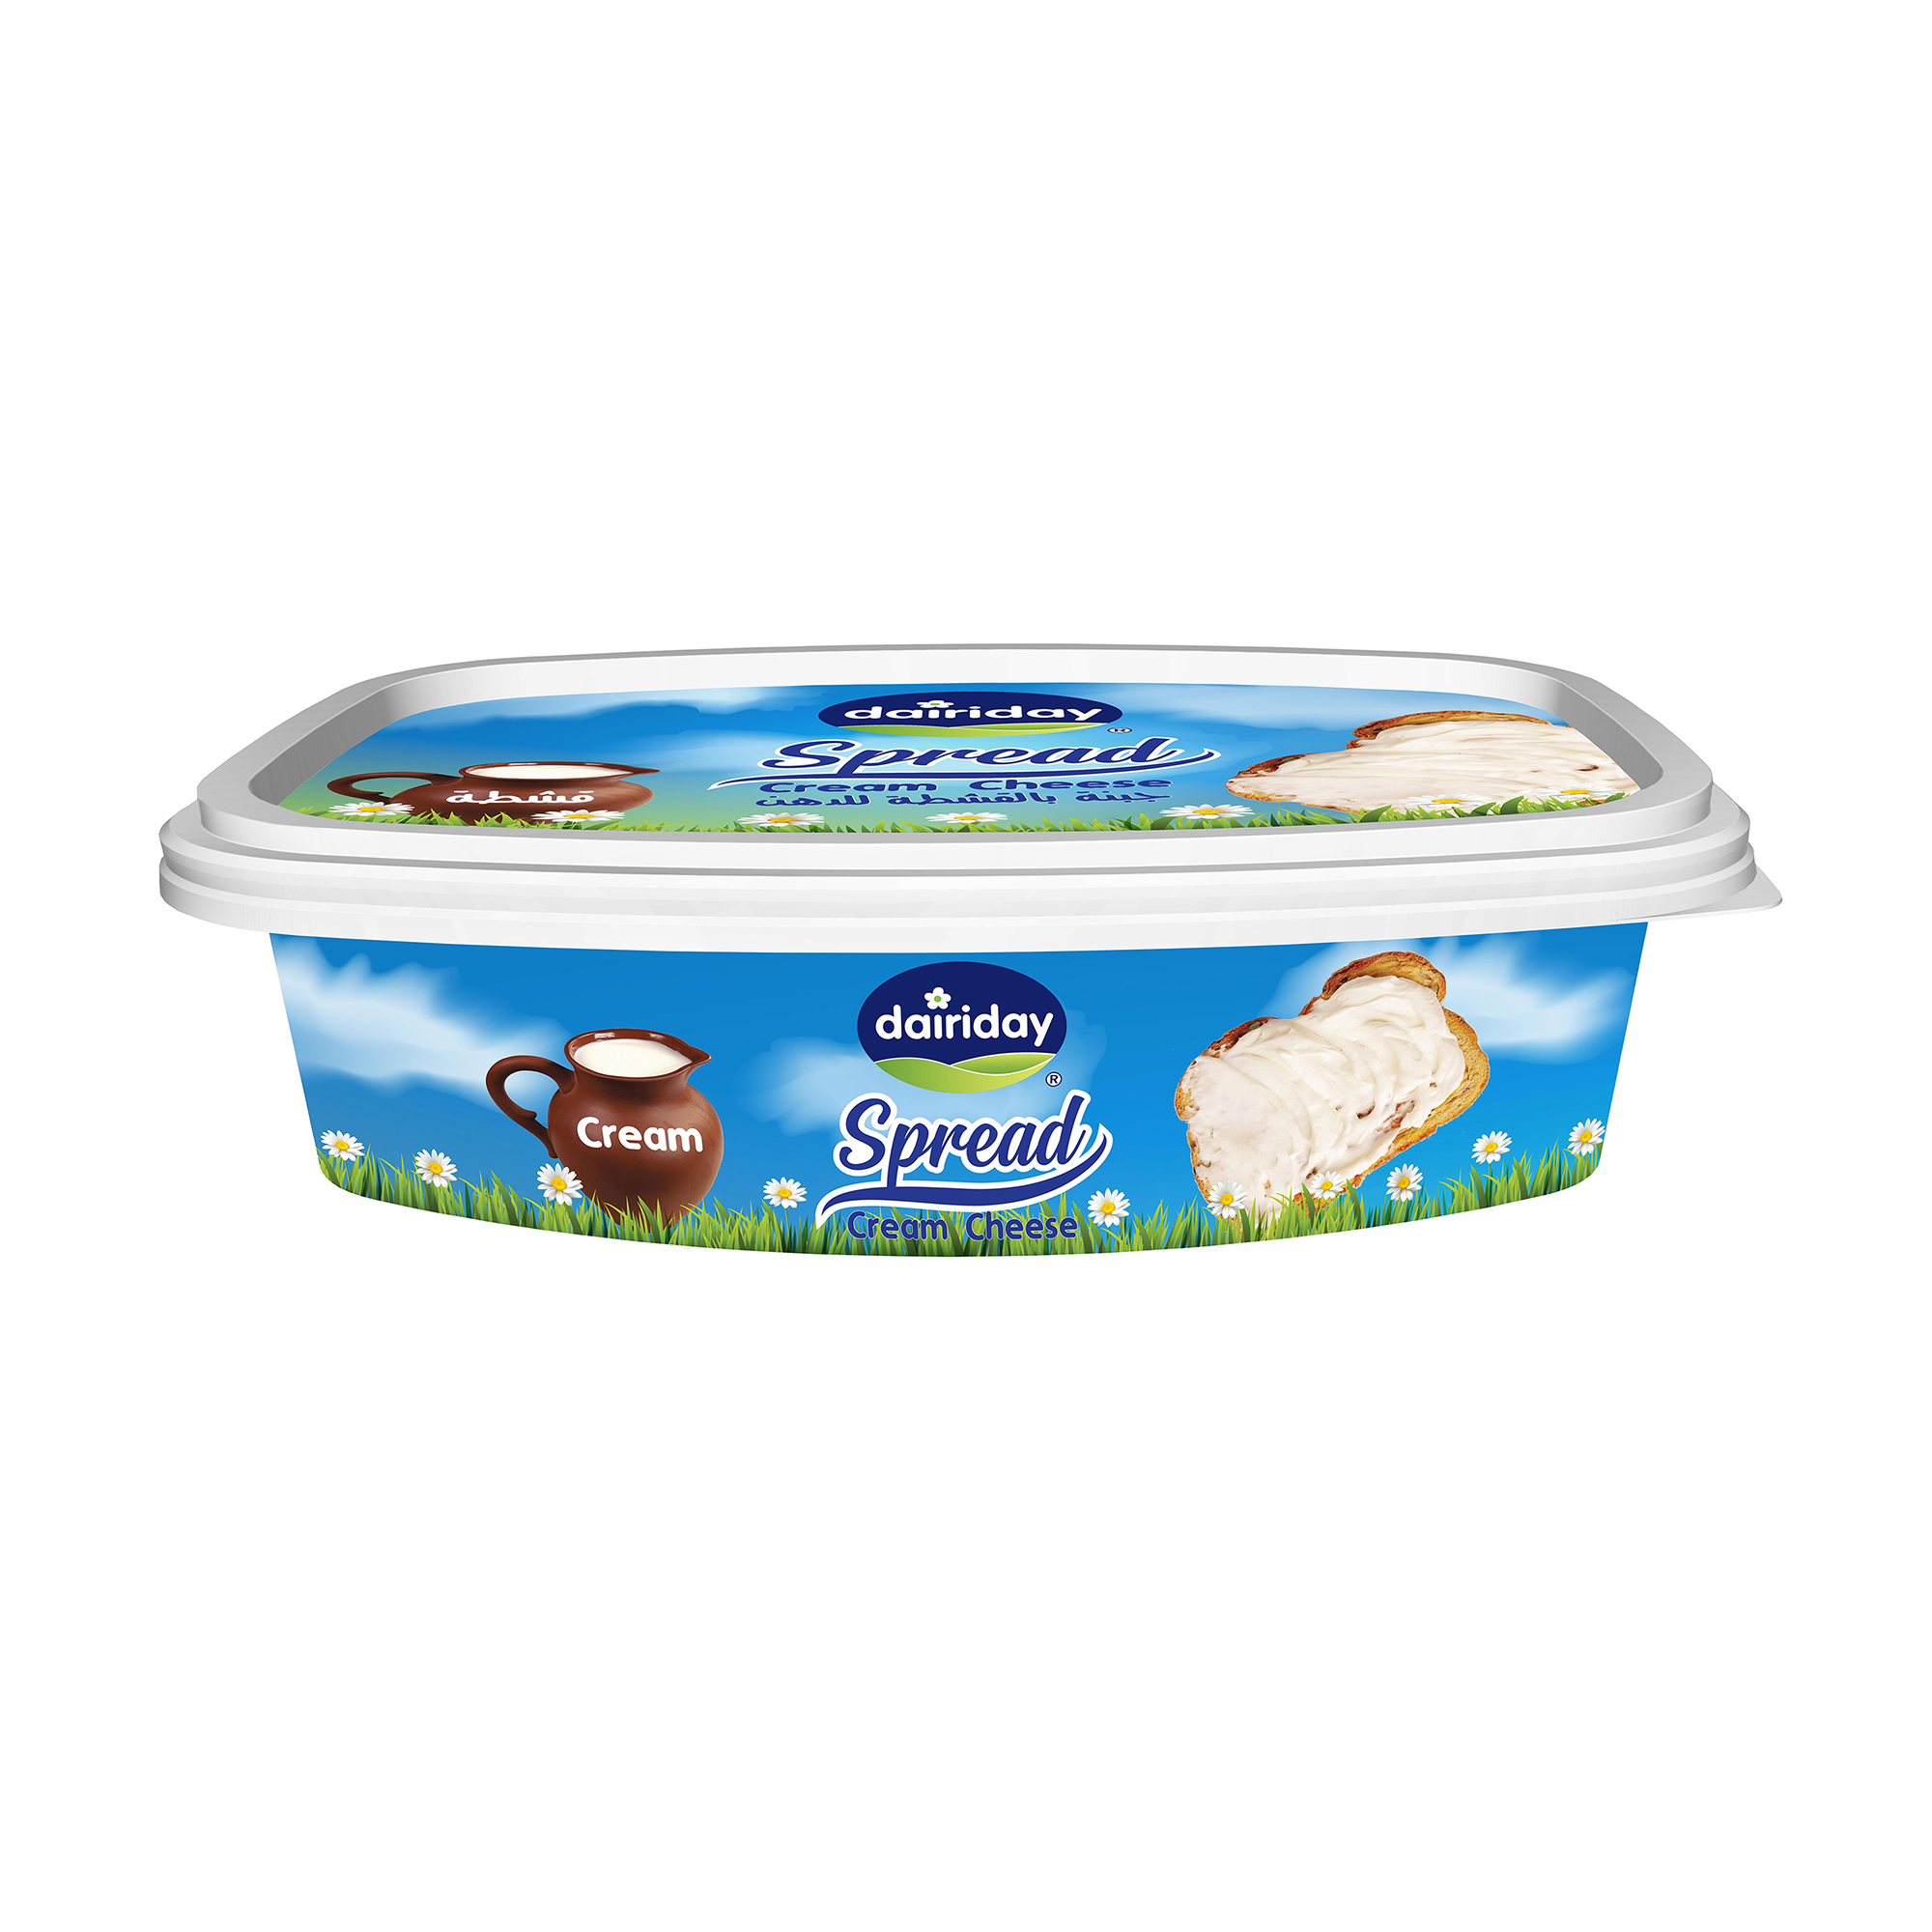 Dairiday-Spread-Cream-Cheese-180g